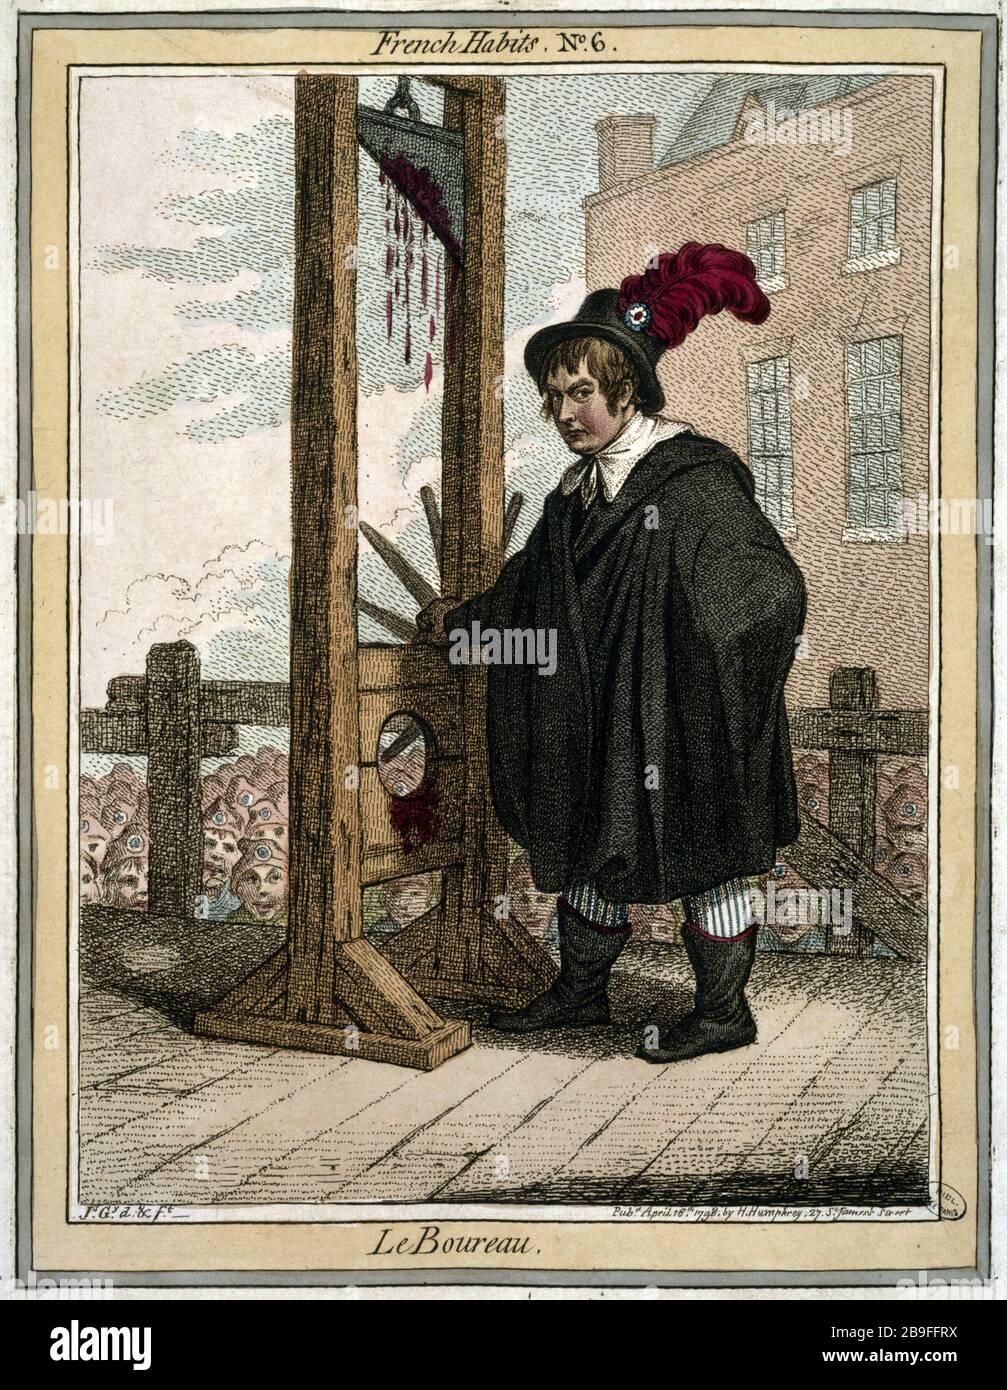 FRENCH CLOTHES, NUMBER 6: the executioner James Gillray (1757-1815). 'French habits, numéro 6 : le boureau'. Gravure. Paris, musée Carnavalet. Stock Photo